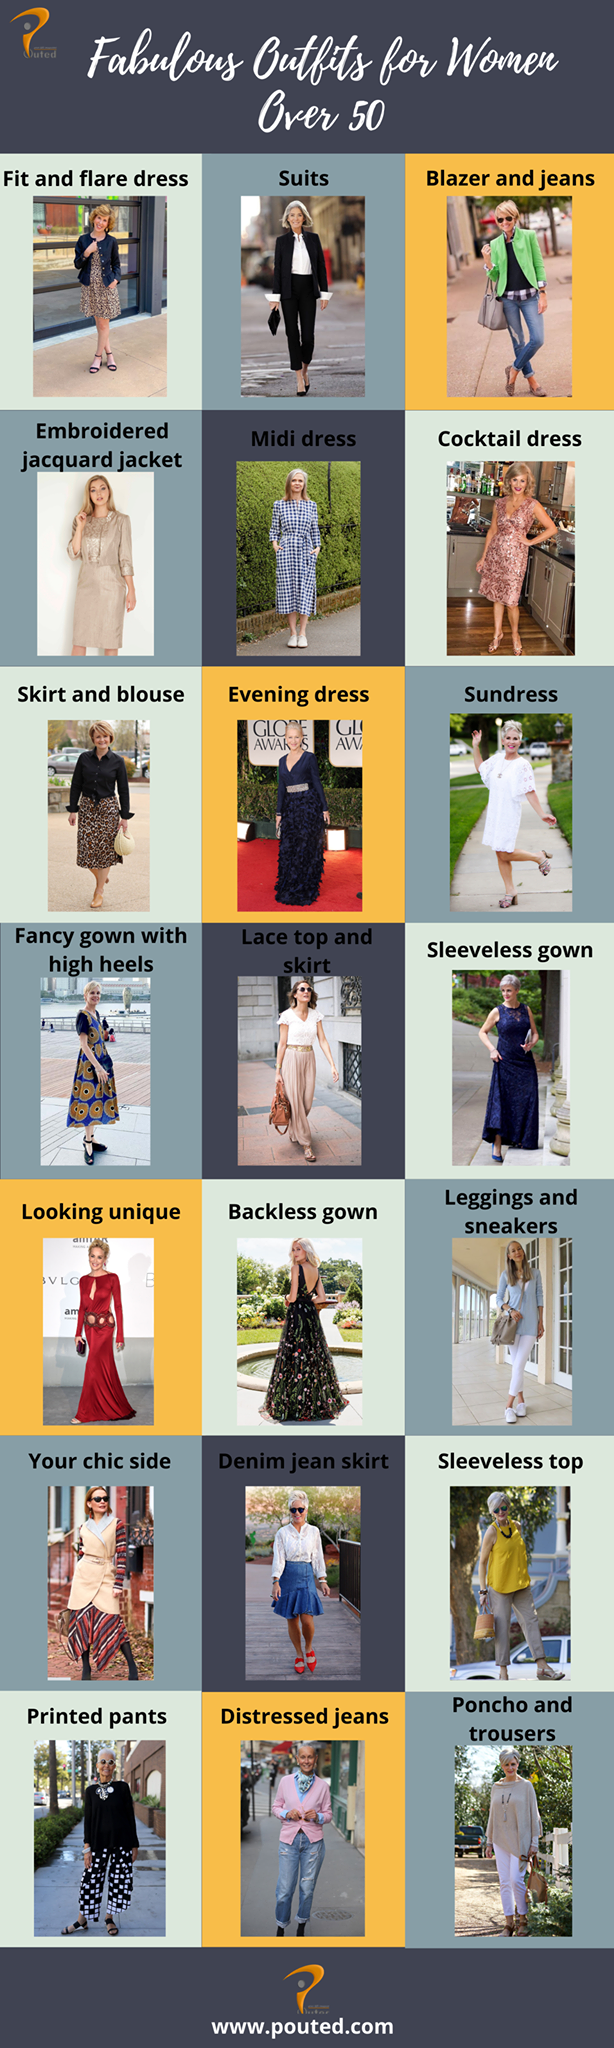 fabulous outfits for women +50